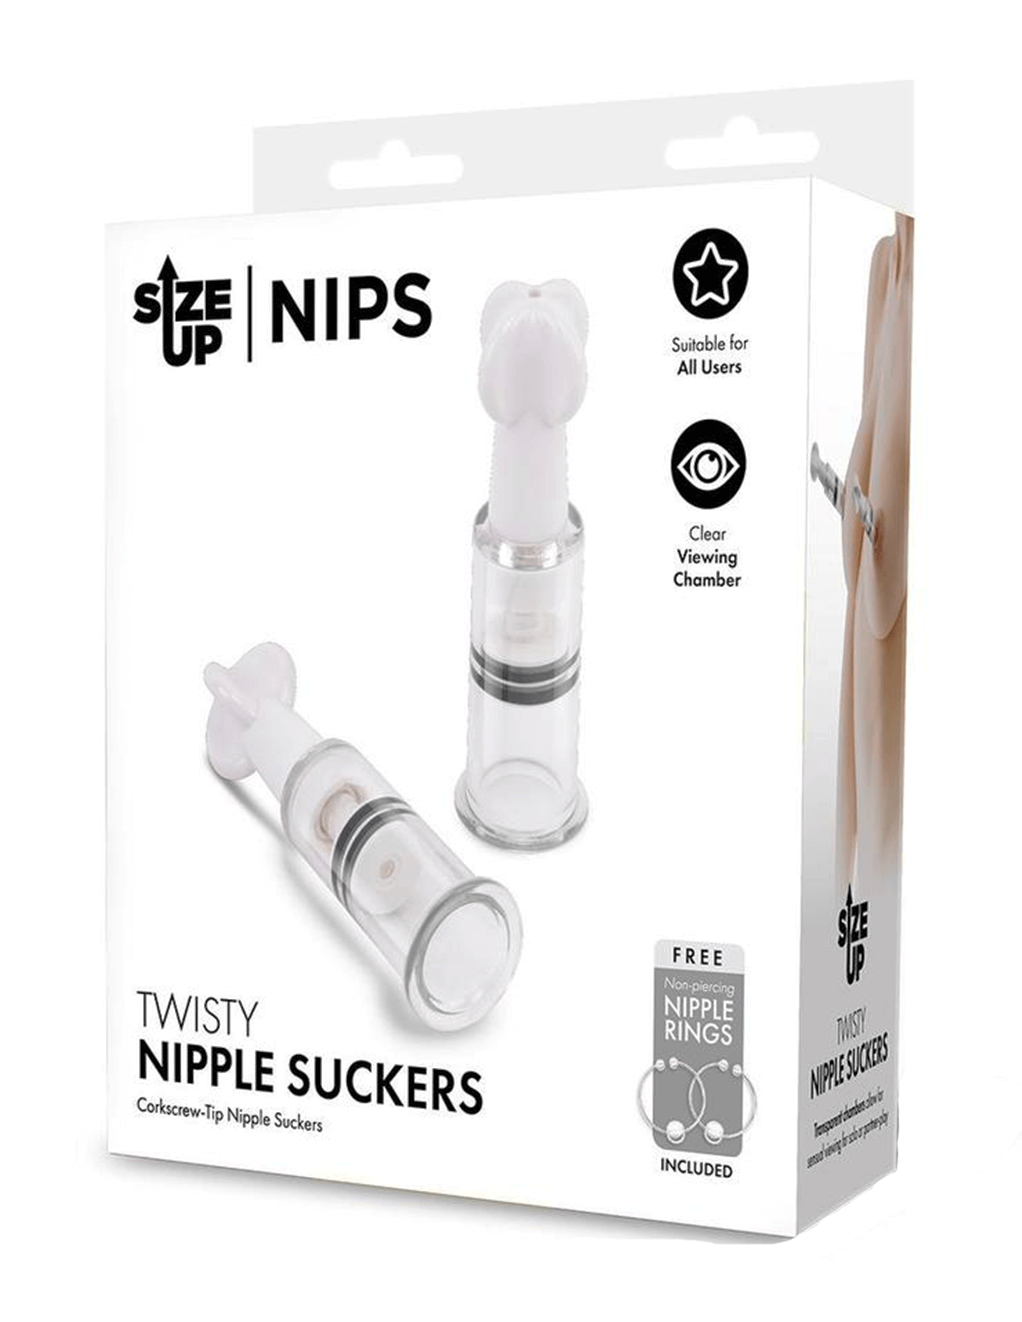 Size Up Twisty Nipple Suckers - Small - Box